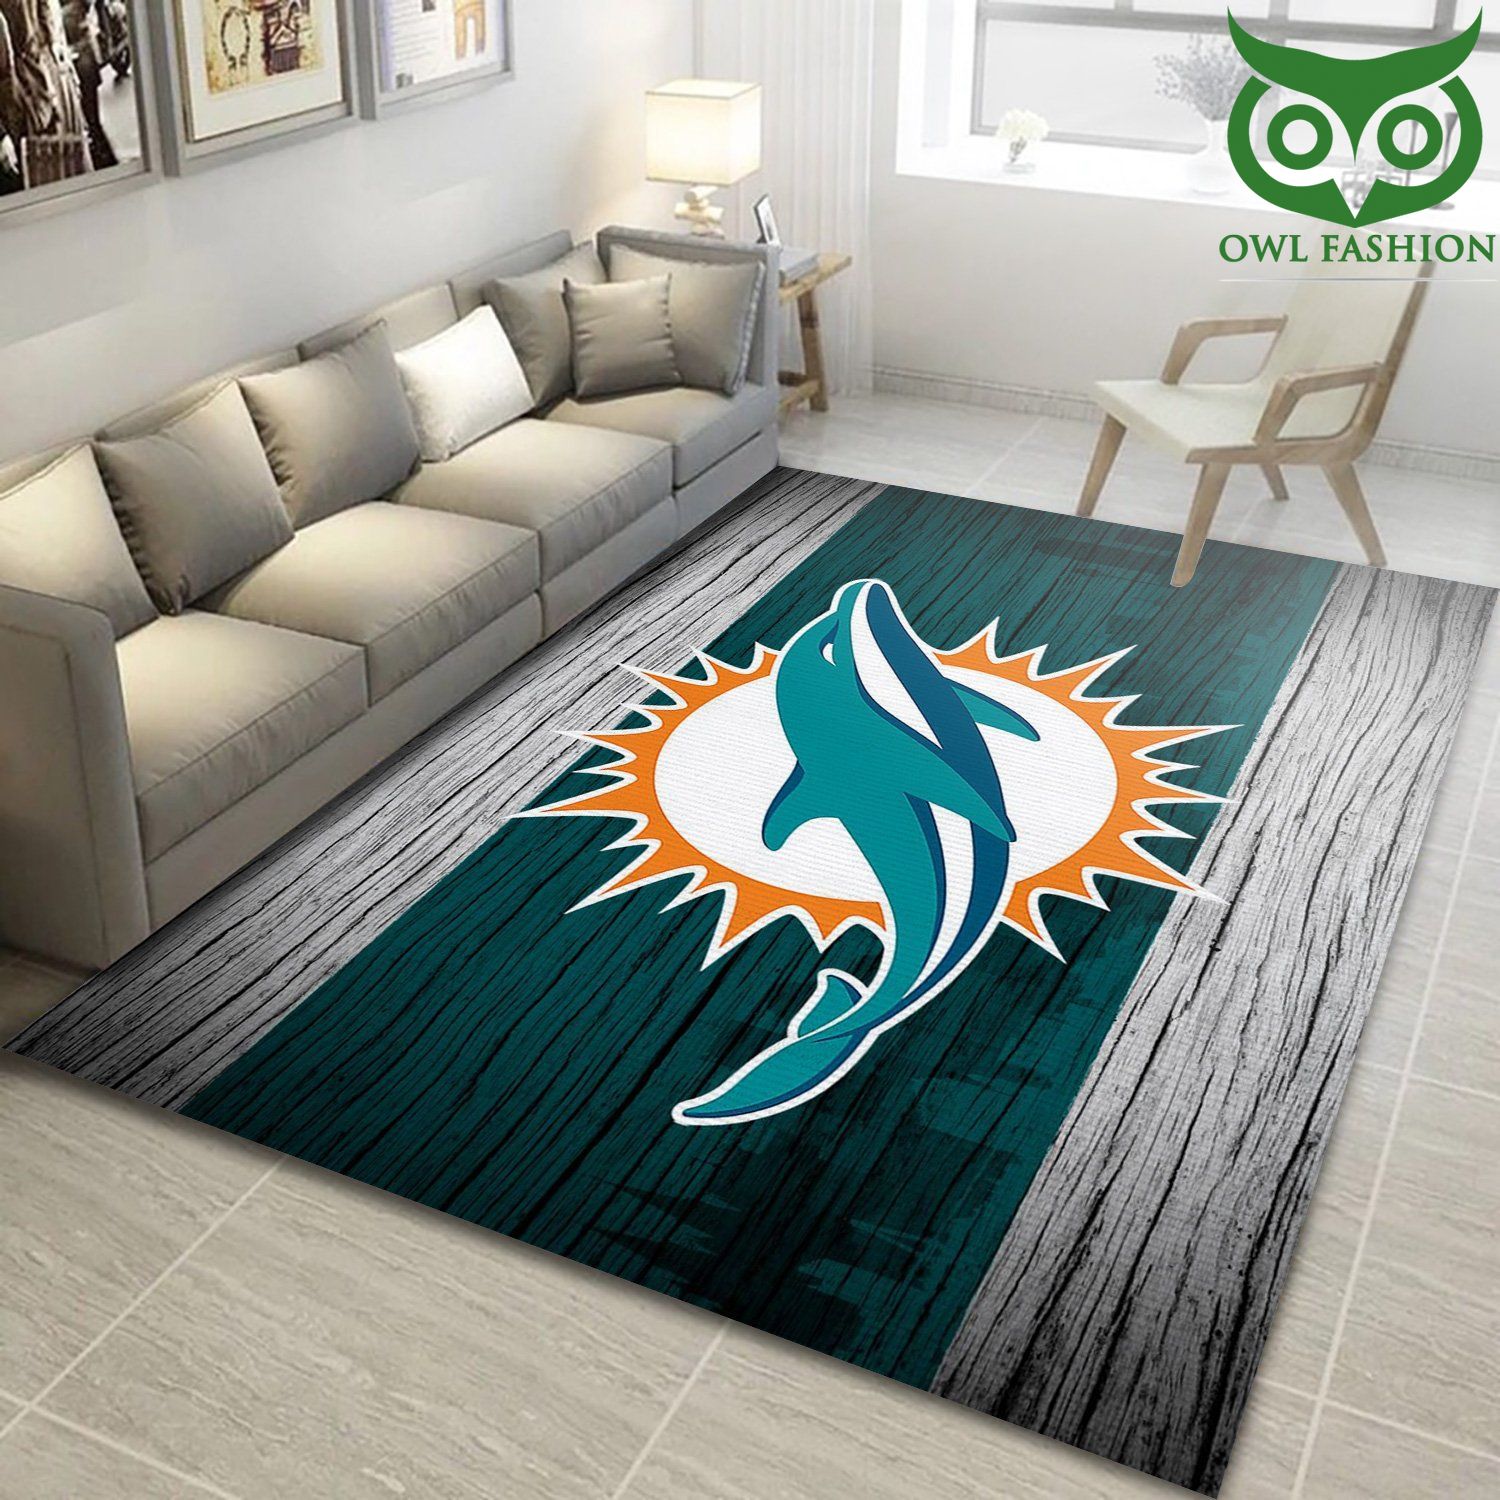 44 Miami Dolphins Nfl carpet rug house decoration